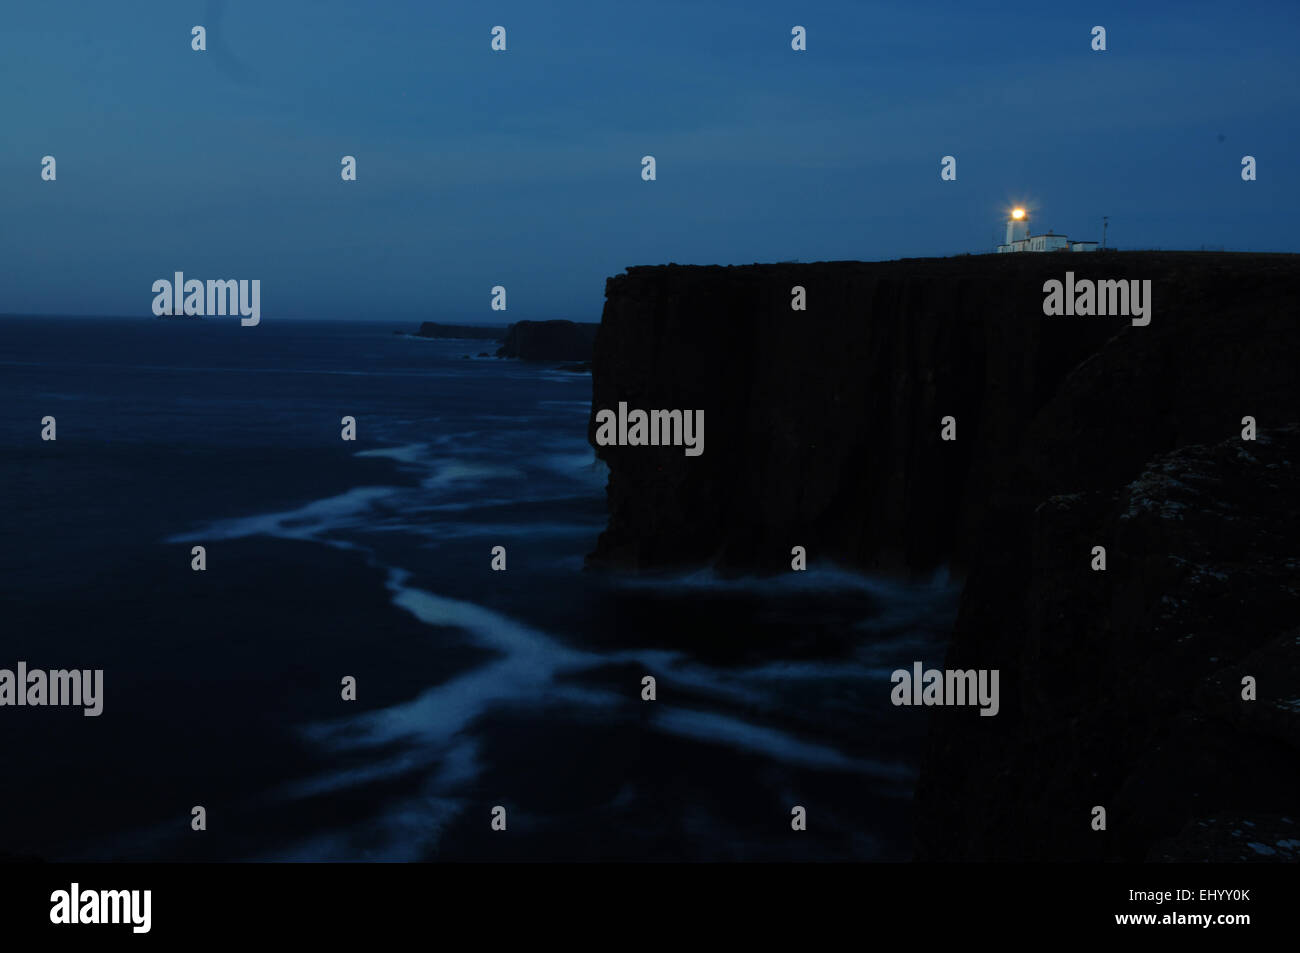 Scotland, Shetland islands, eshaness, mainland, west coast, Atlantic, waves, sea, Great Britain, Europe, lighthouse, at night Stock Photo